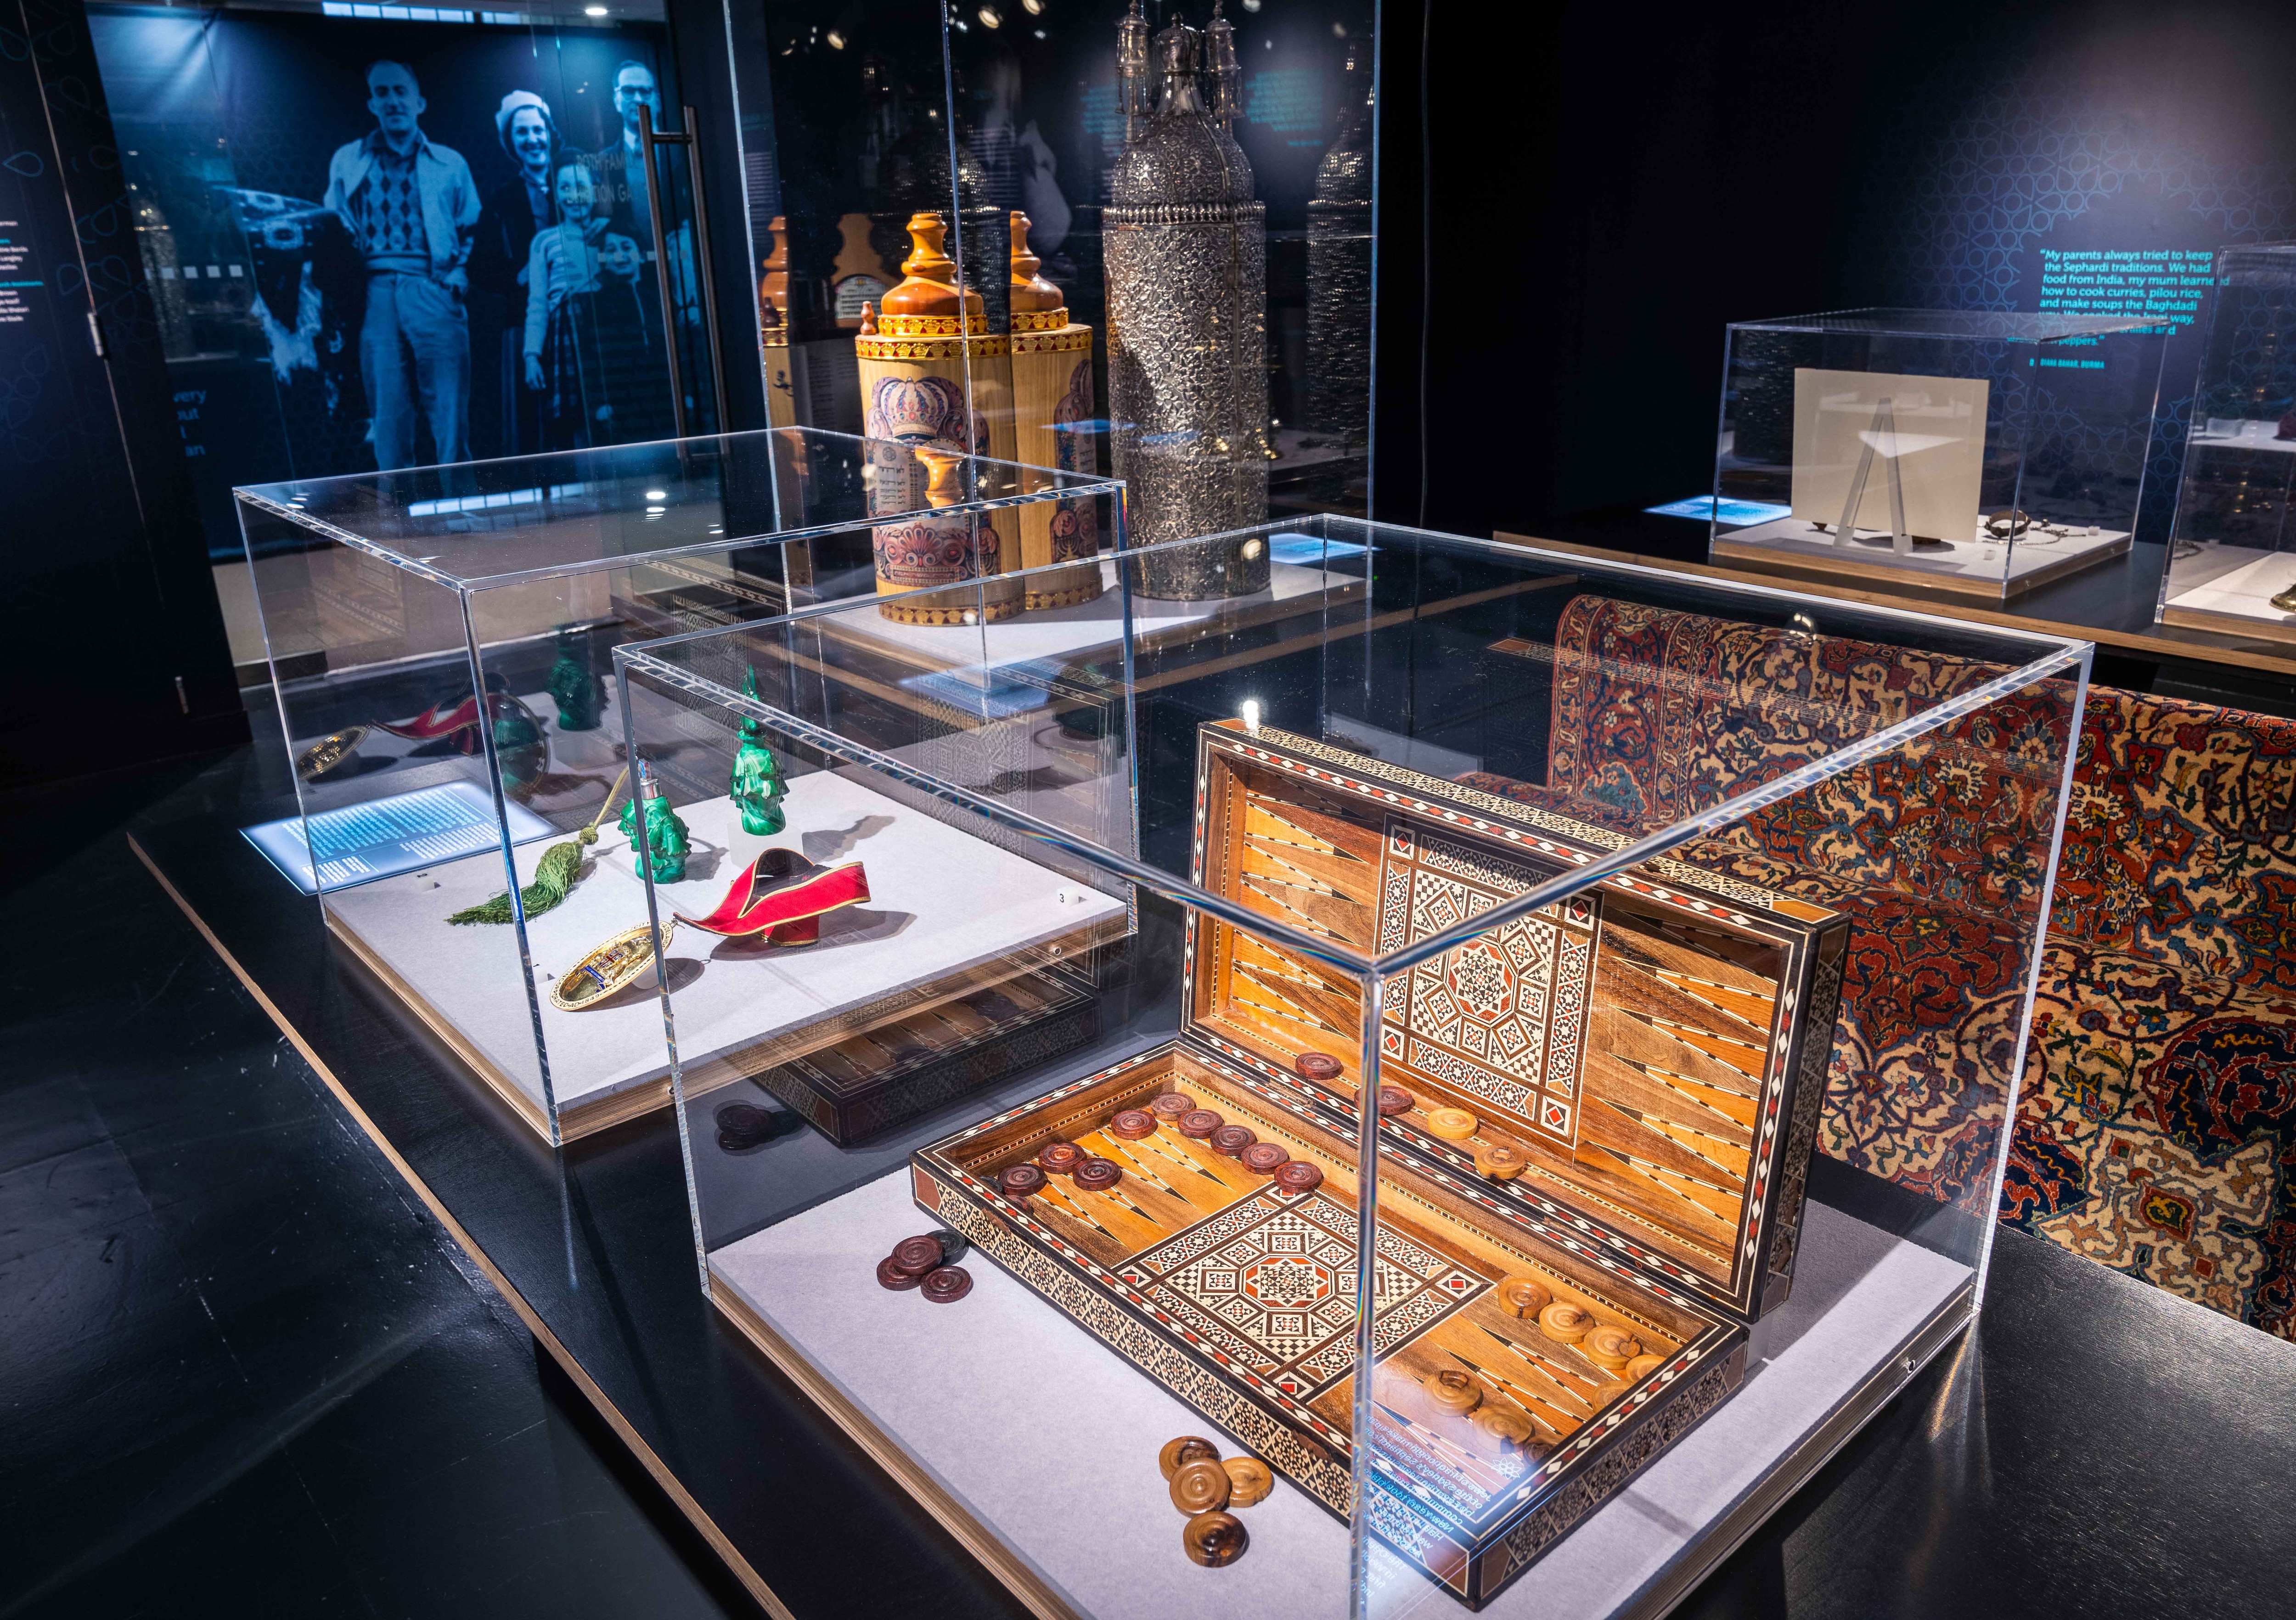 The Jews from Islamic Lands" exhibition at the Sydney Jewish Museum showcases artefacts reflecting Sephardi Jewish history.  